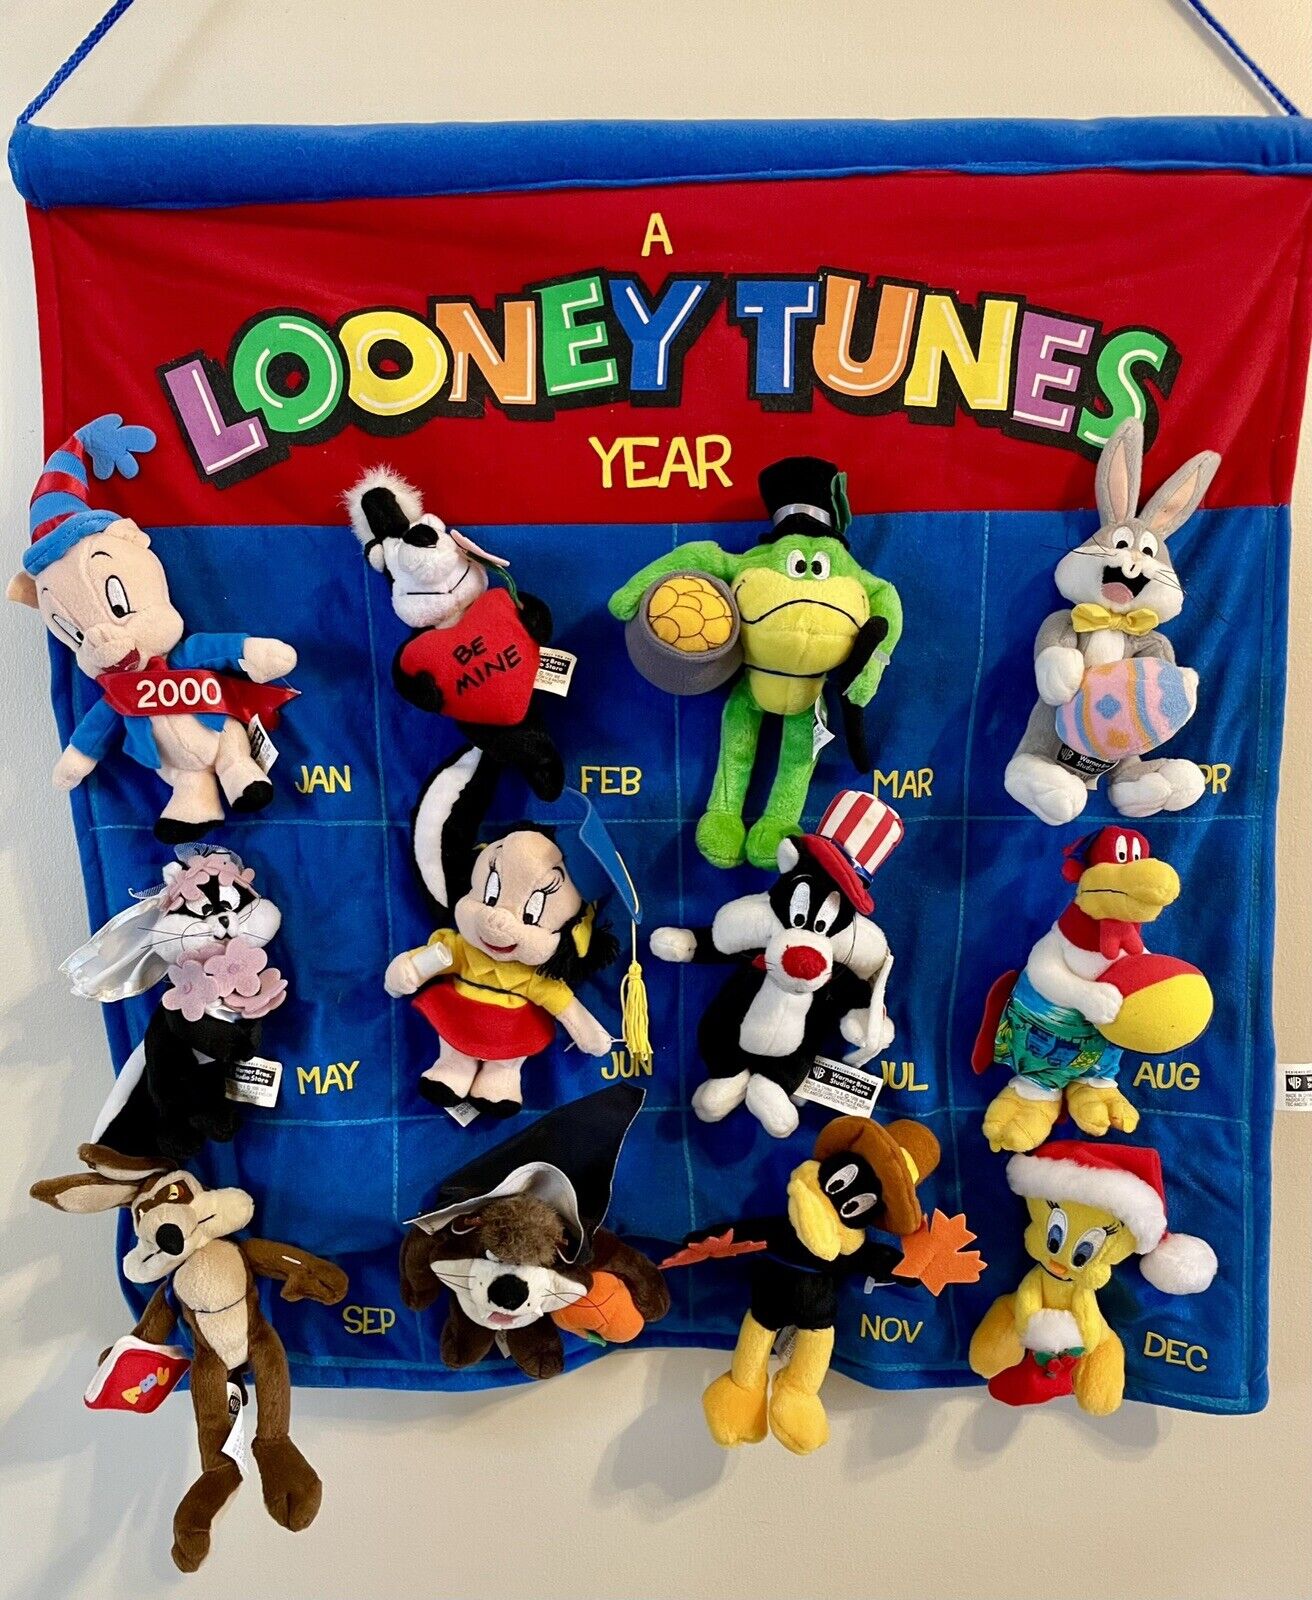 VINTAGE Looney Tunes Year 2000 Bean Bag  Plush Toys w/ Wall Calendar Display